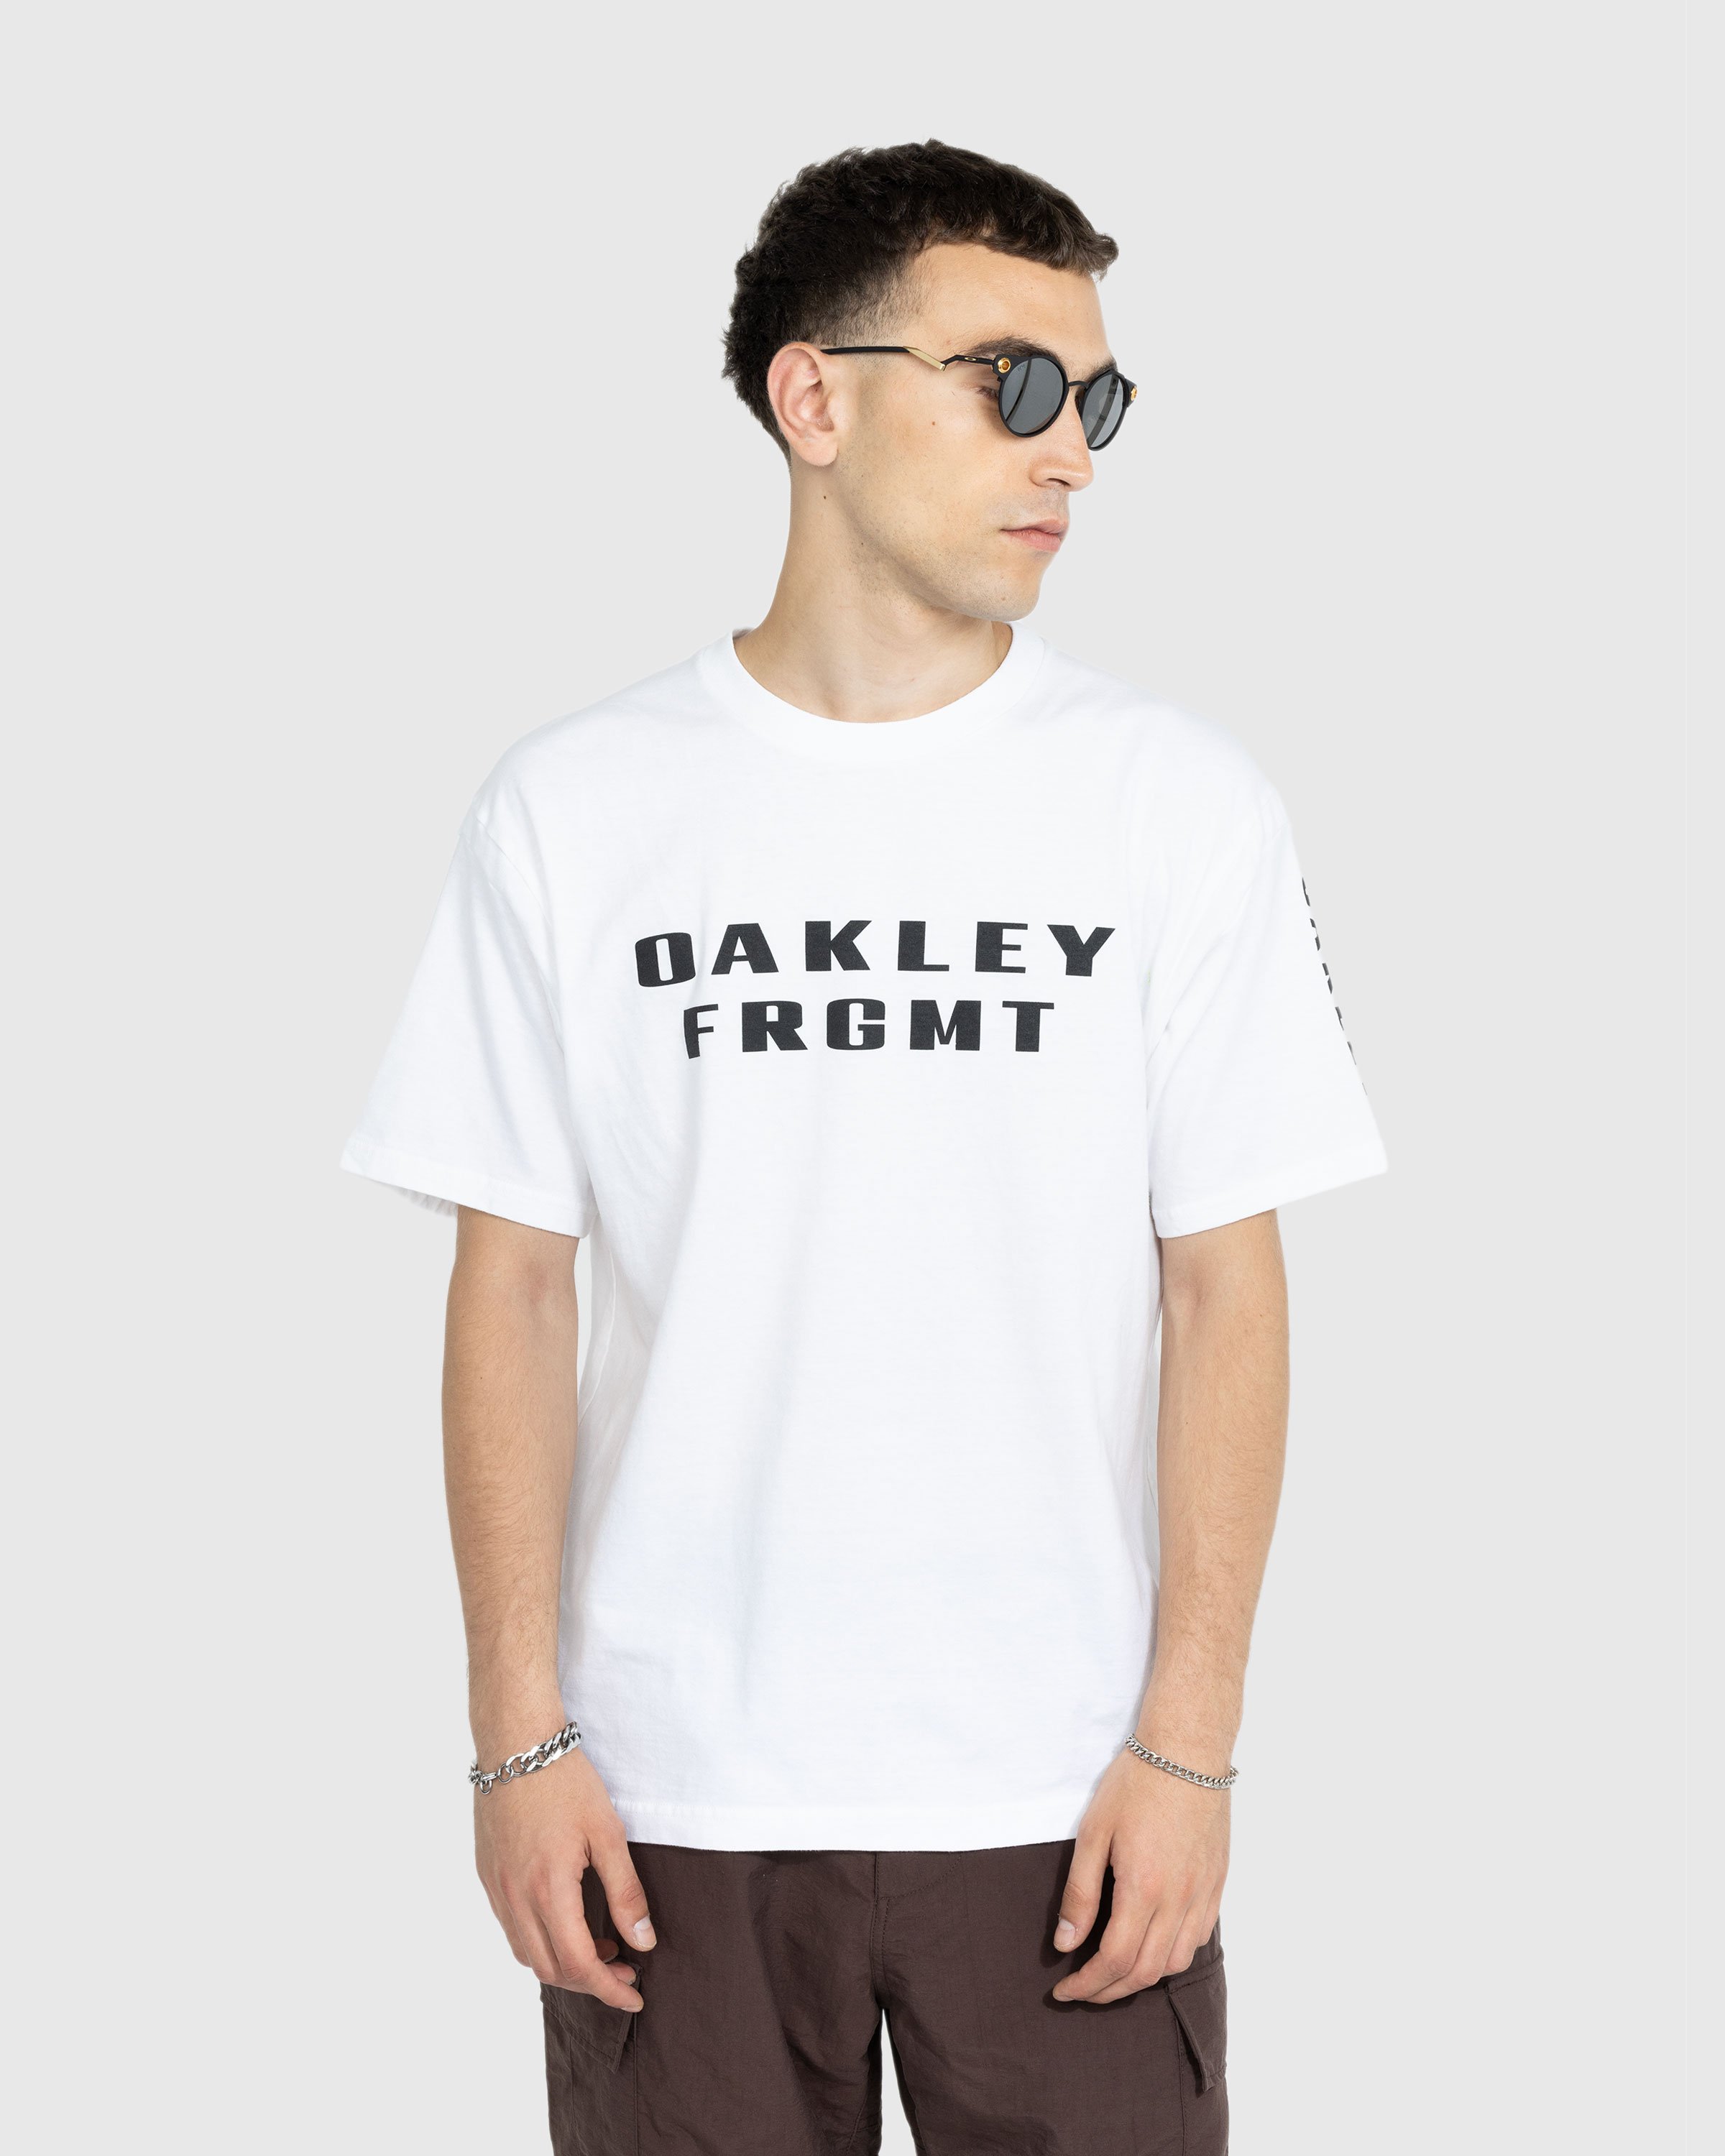 Oakley x Kylian Mbappé - Deadbolt KM - Accessories - Black - Image 3